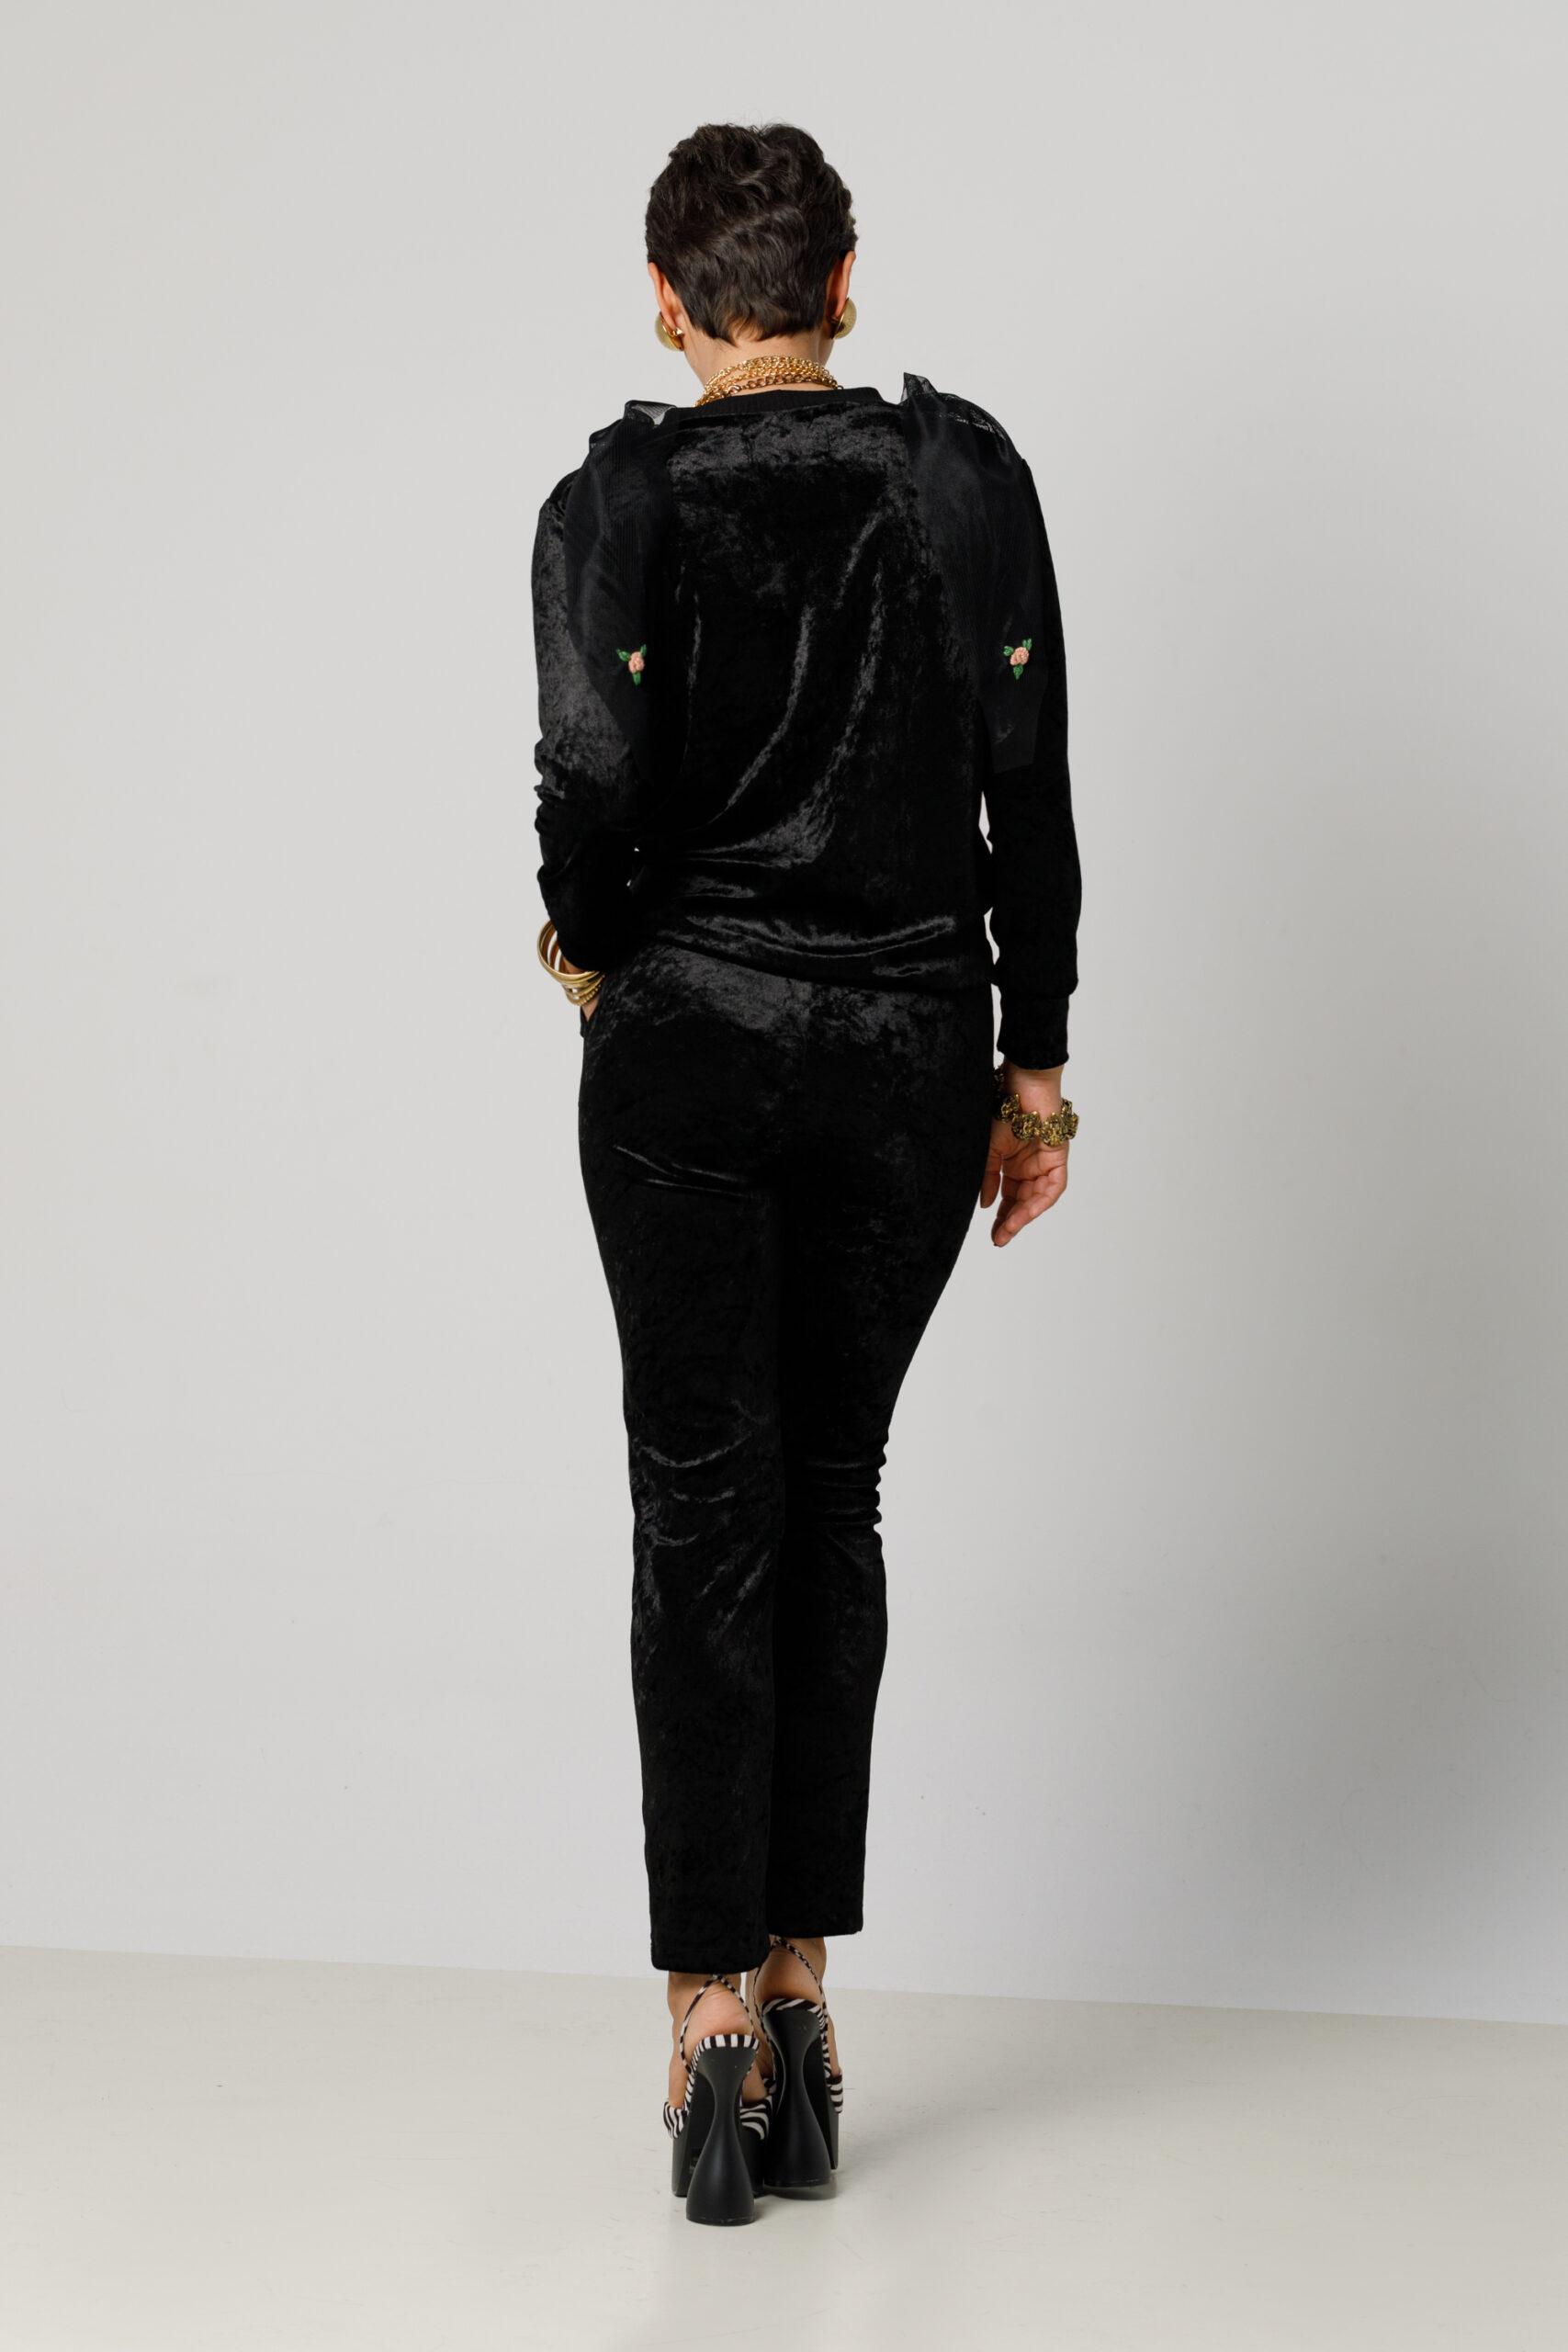 DIEM trousers in black velvet with transparent tulle pockets. Natural fabrics, original design, handmade embroidery